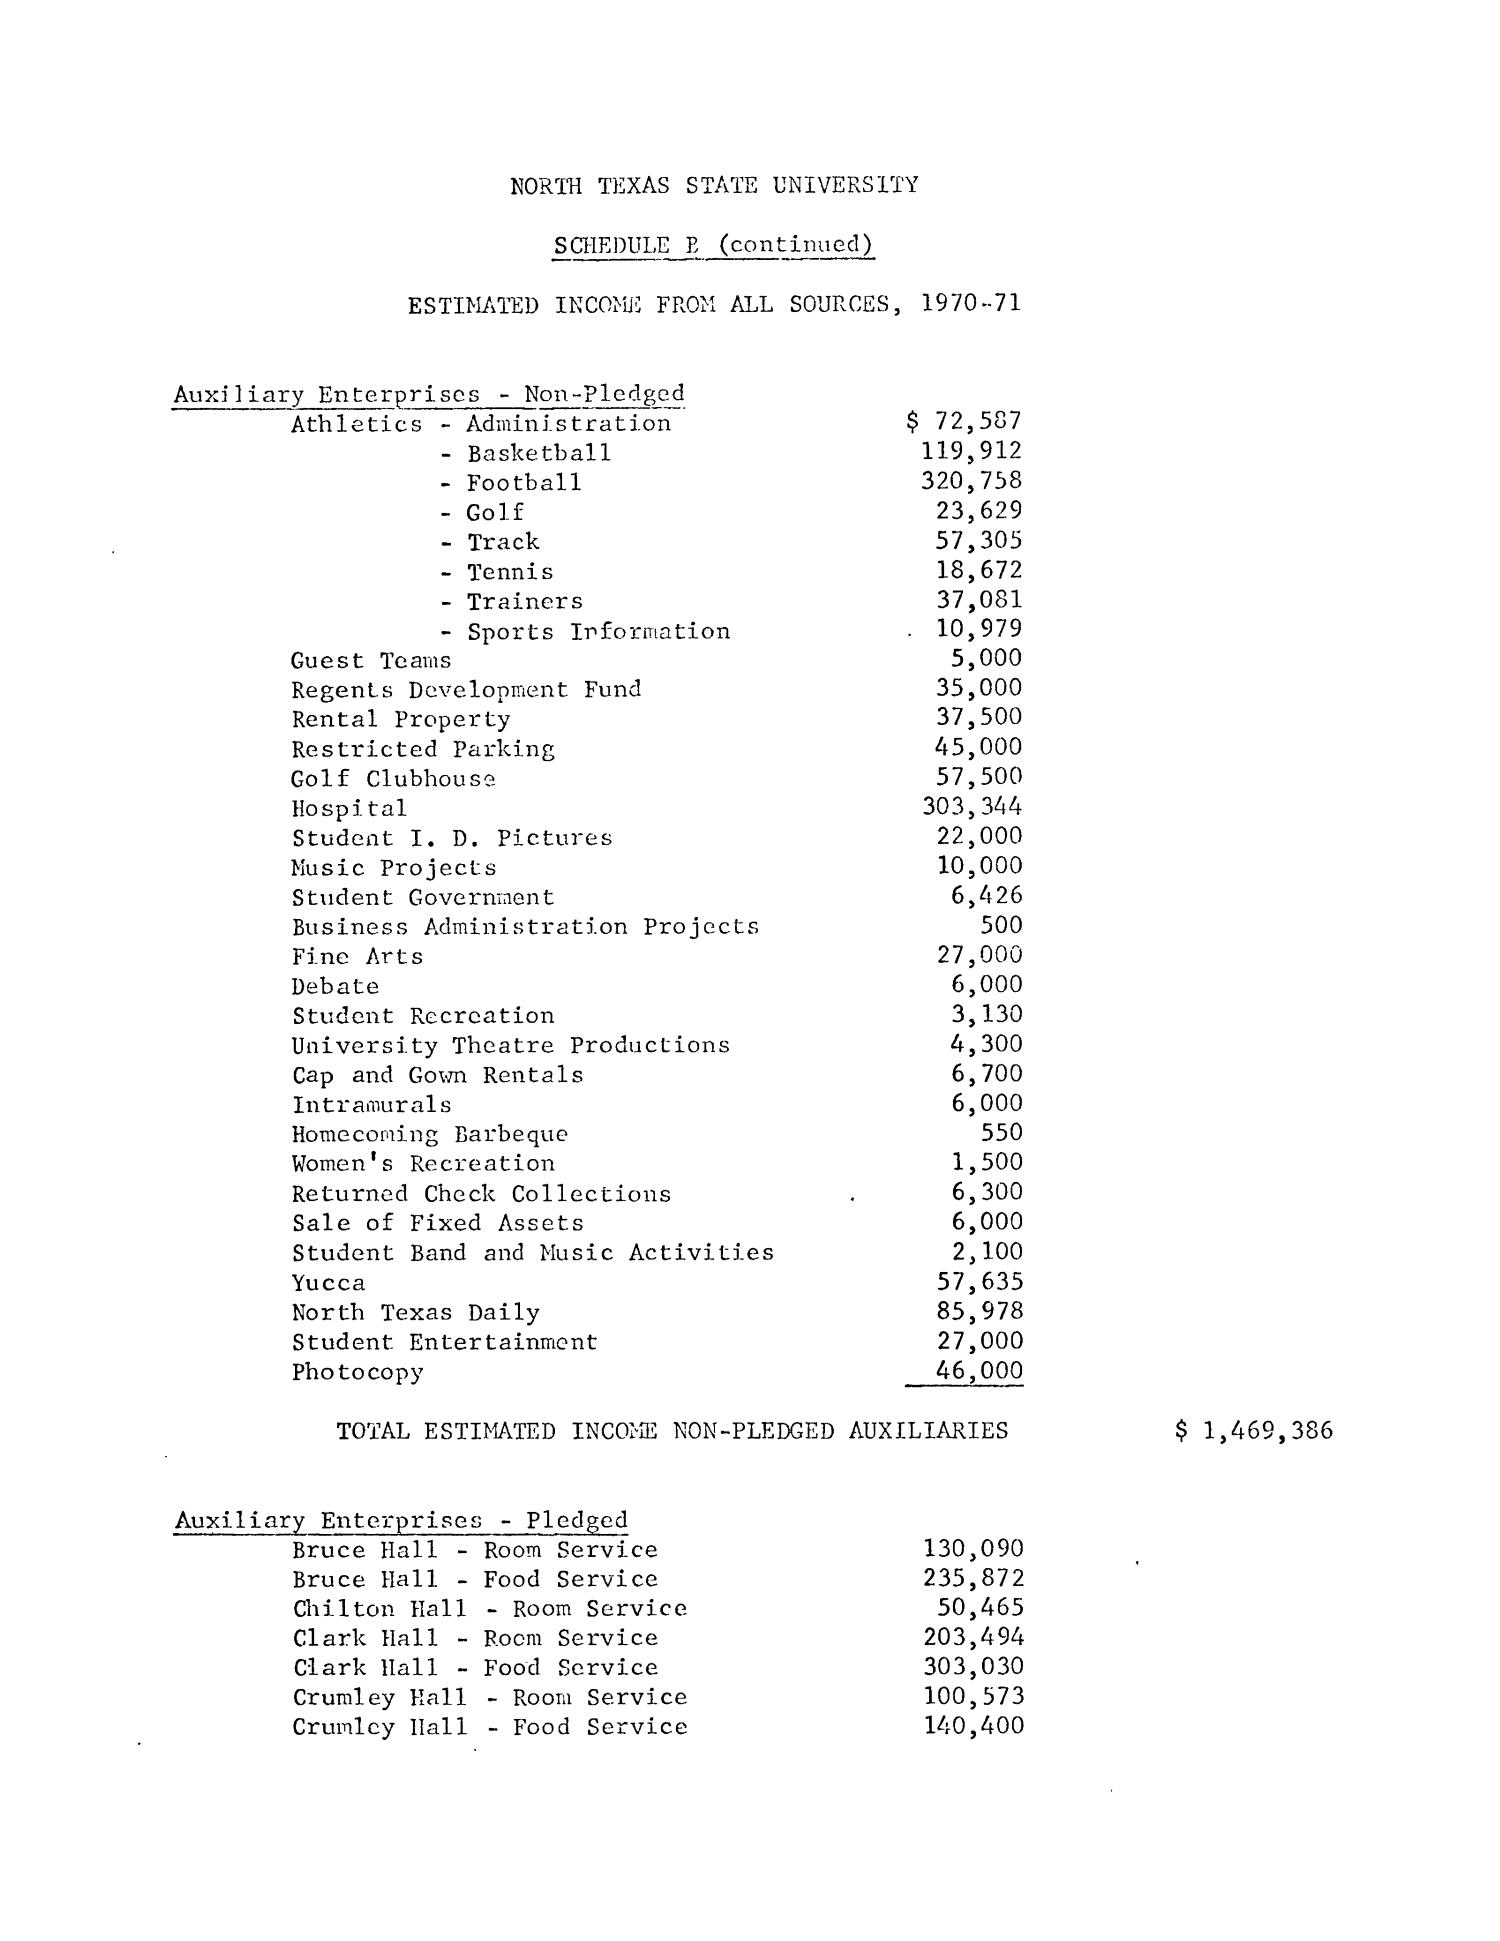 North Texas State University Budget: 1970-1971
                                                
                                                    6
                                                